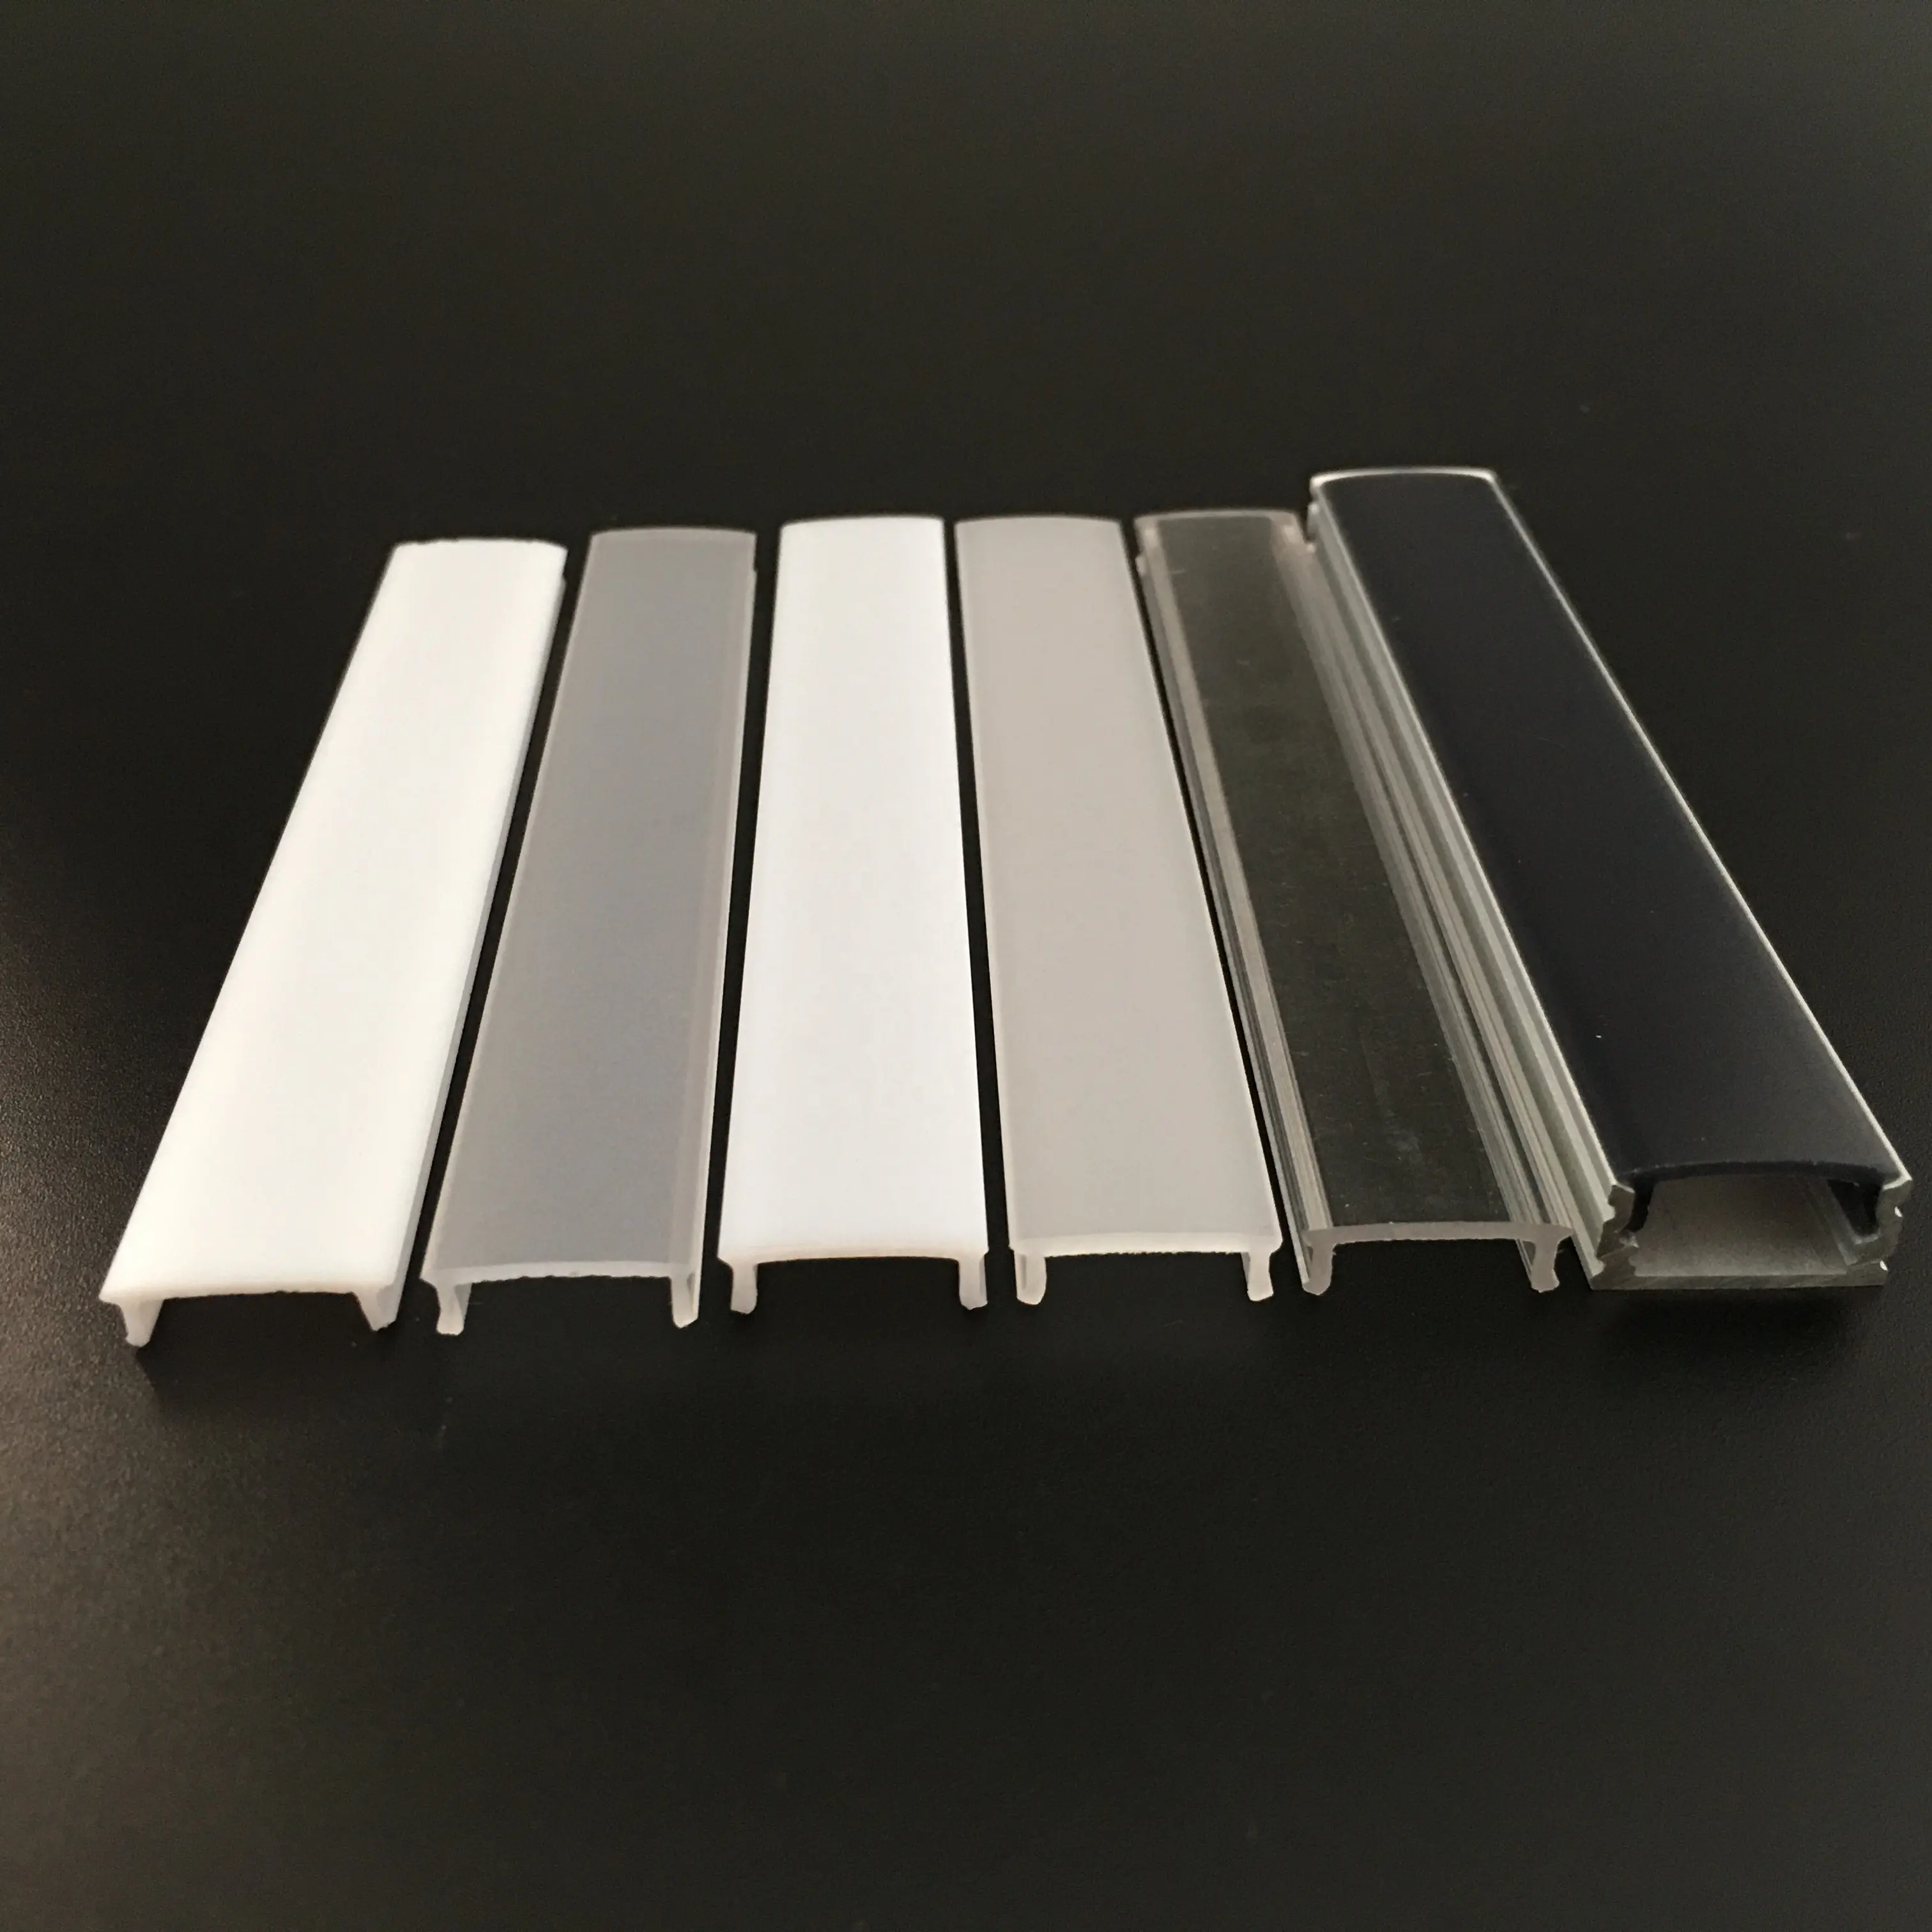 16mm linearer PMMA-PC-Diffusor für versenktes Aluminium-LED-Profil